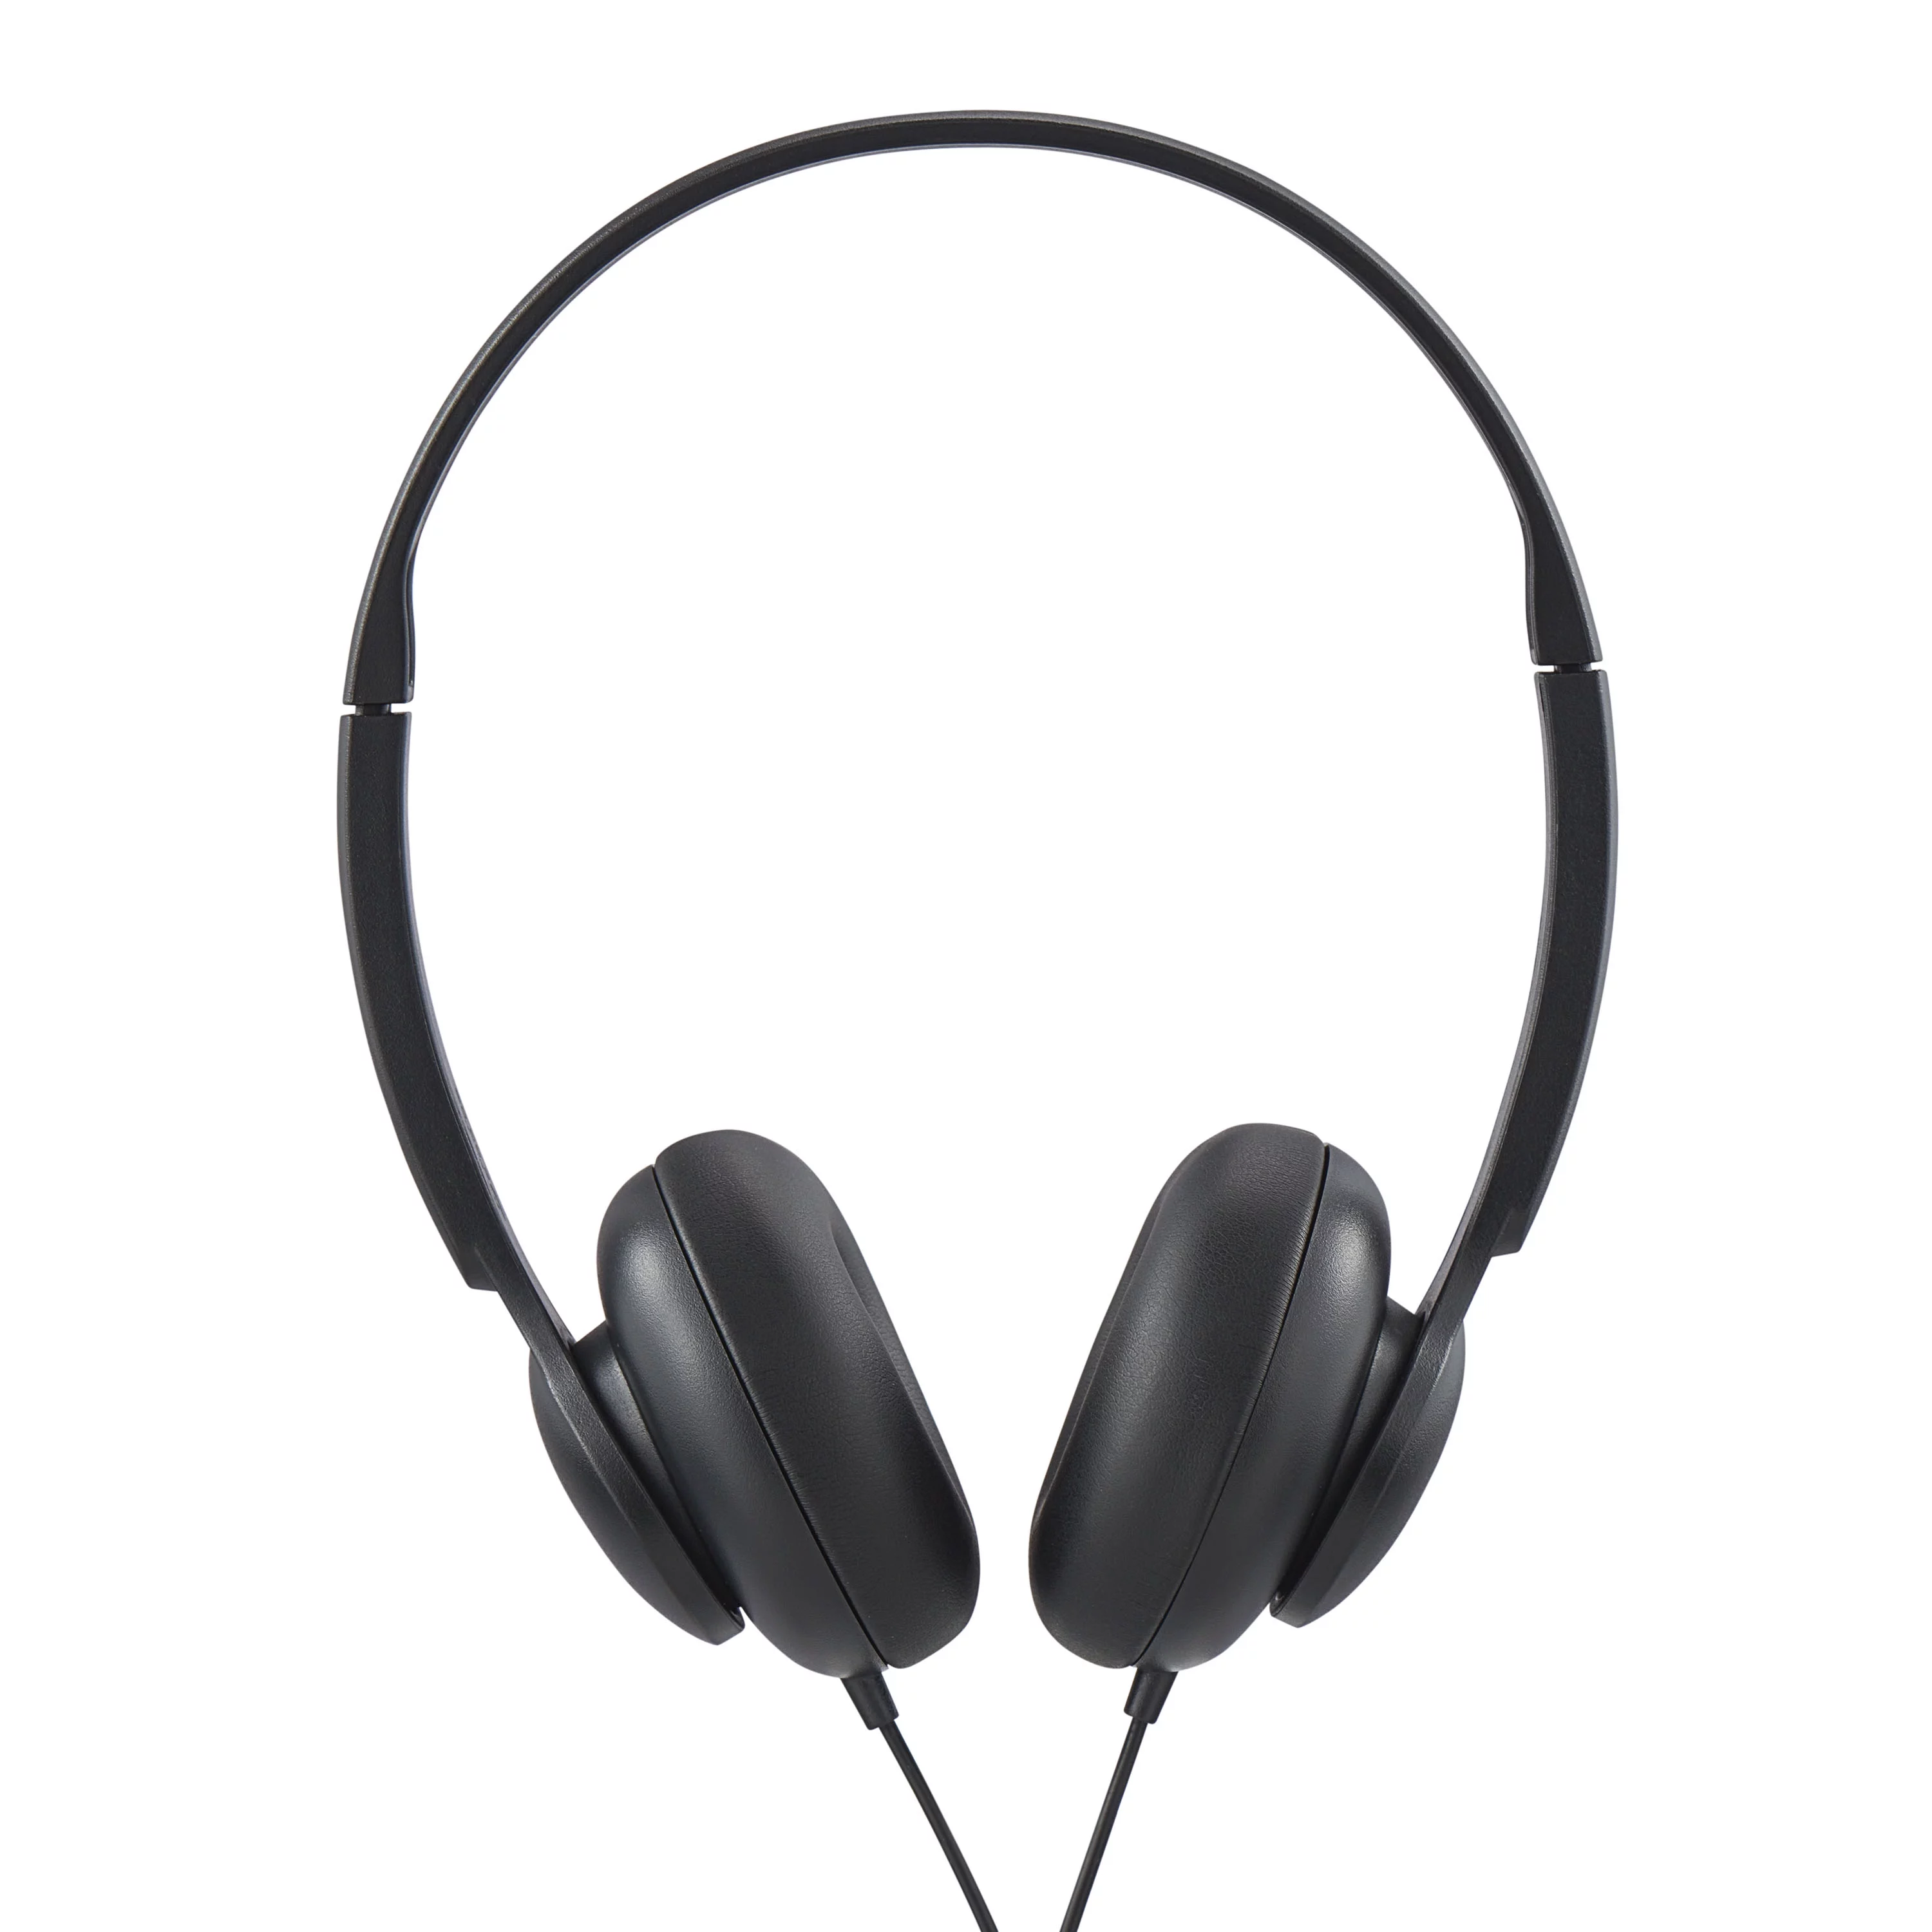 onn. Wired on-Ear Headphones - Black, New